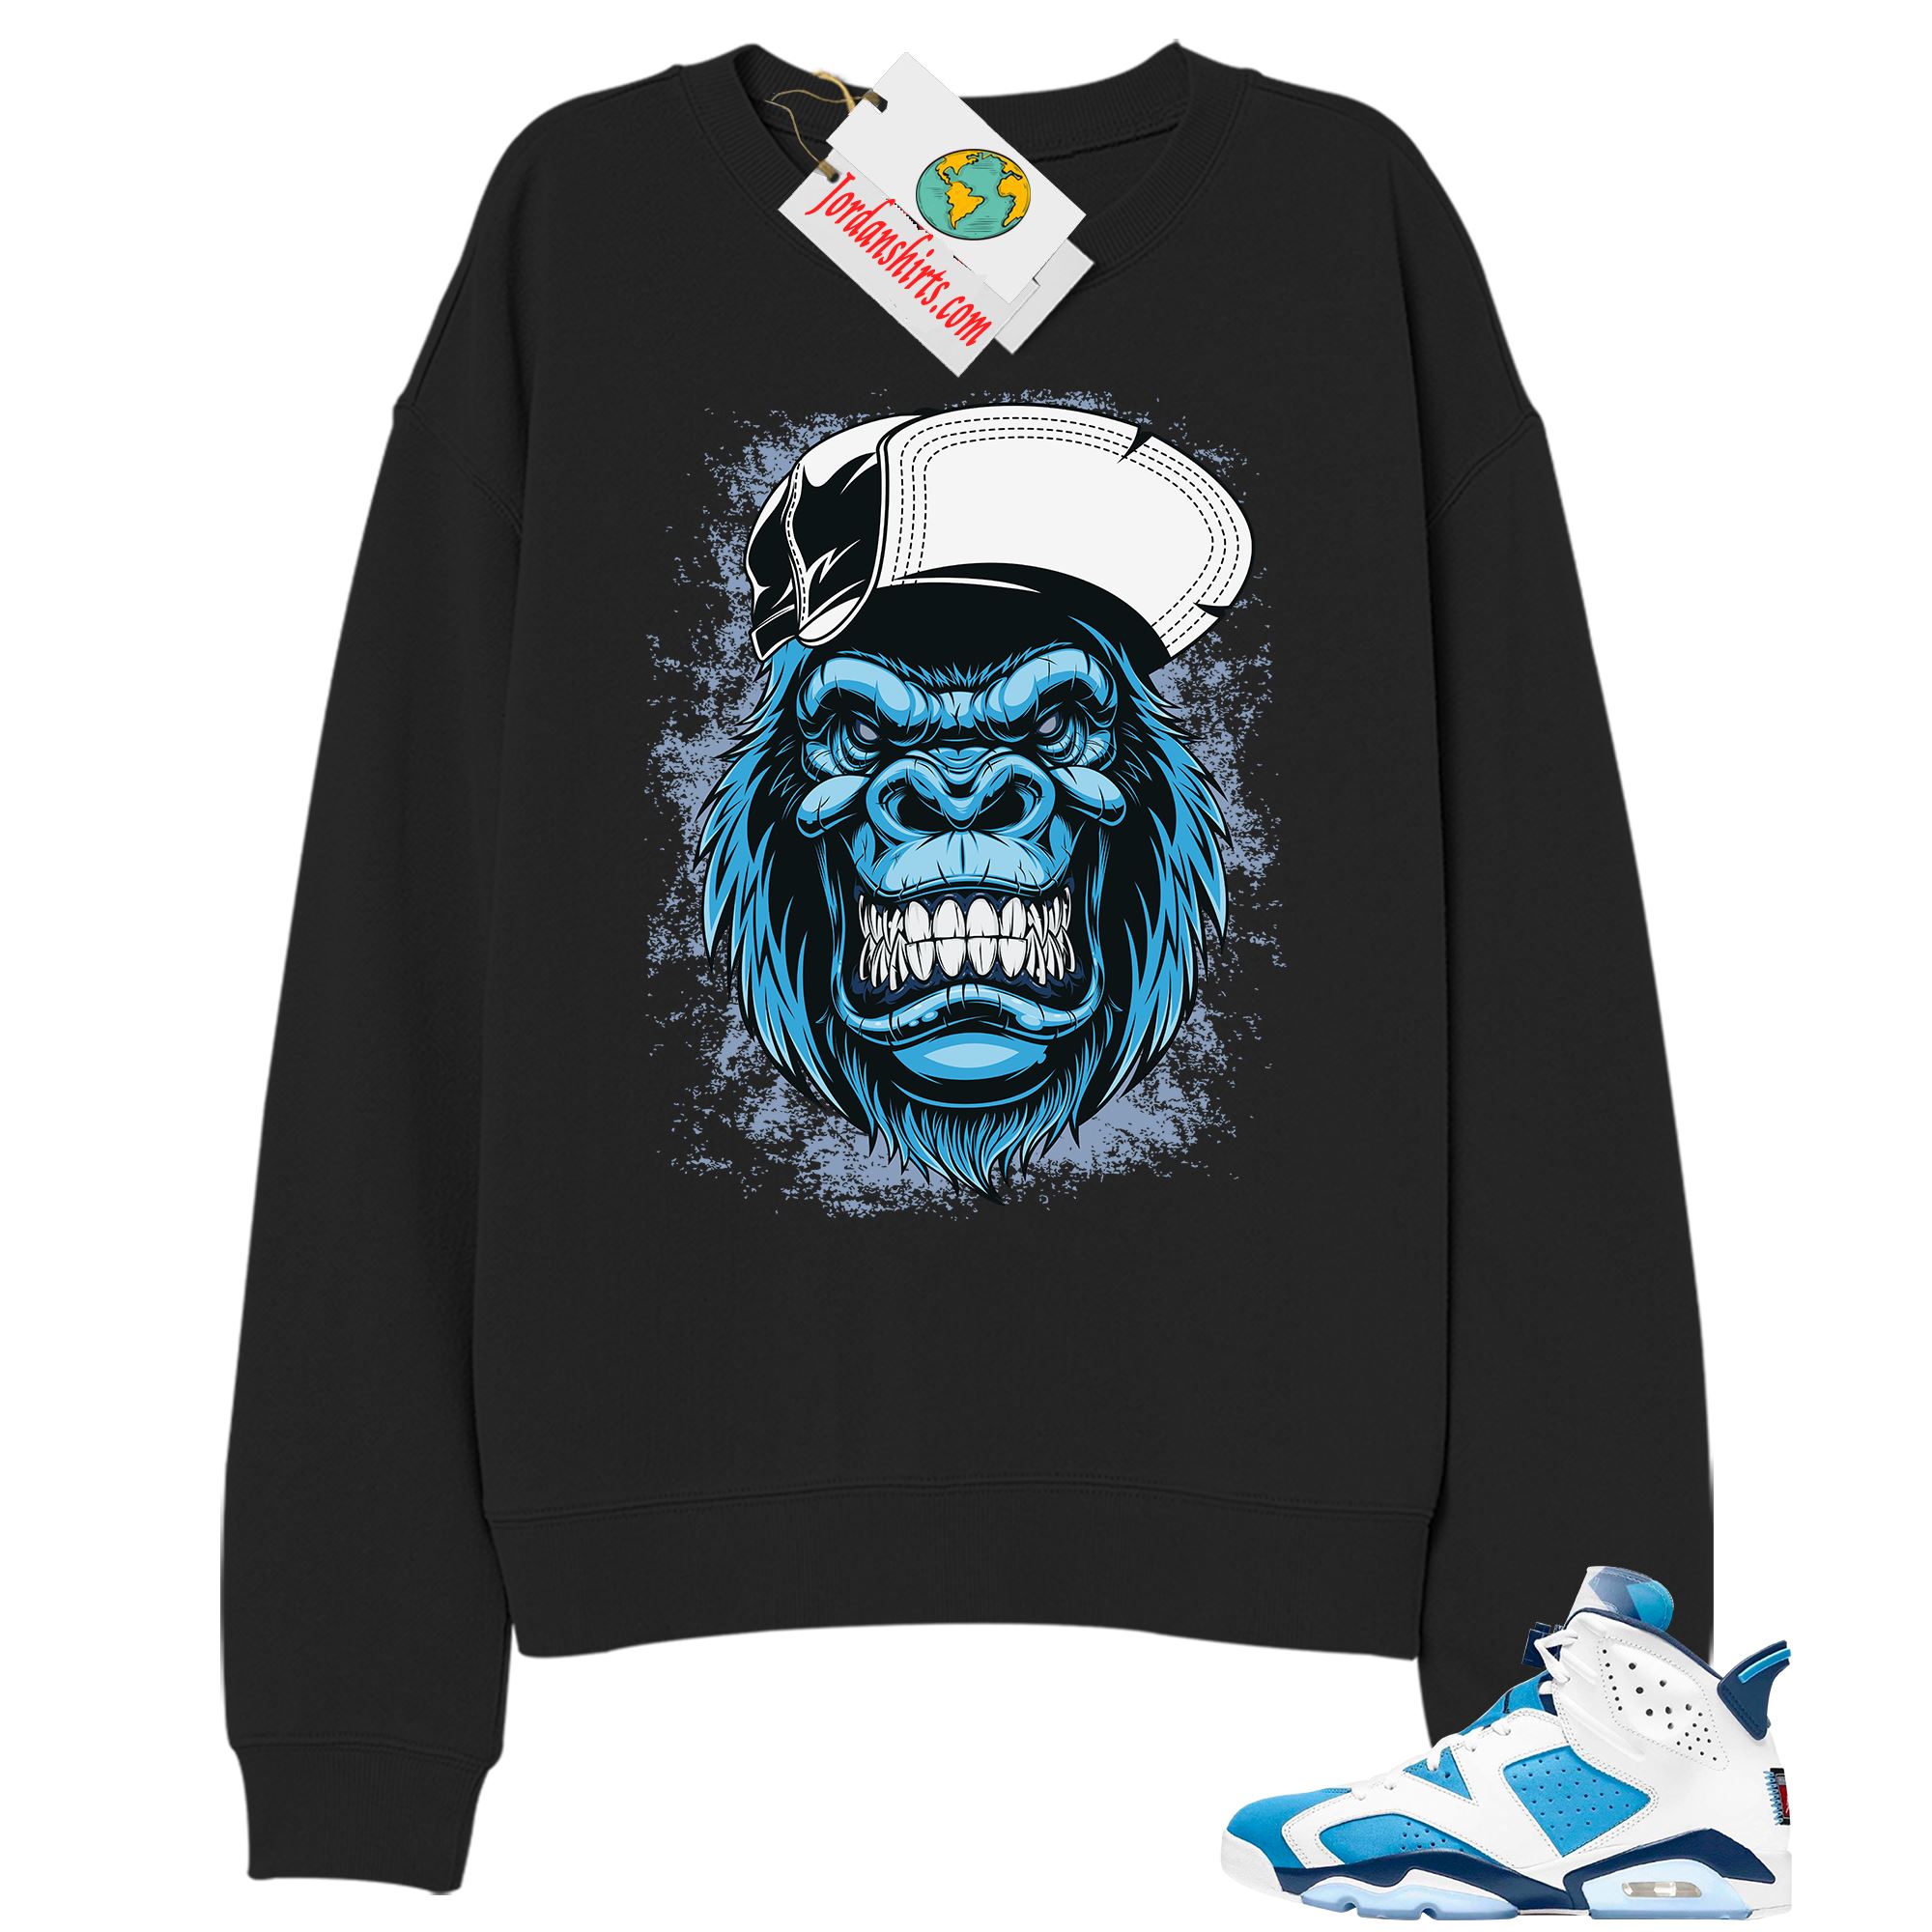 Jordan 6 Sweatshirt, Ferocious Gorilla Black Sweatshirt Air Jordan 6 Unc 6s Full Size Up To 5xl